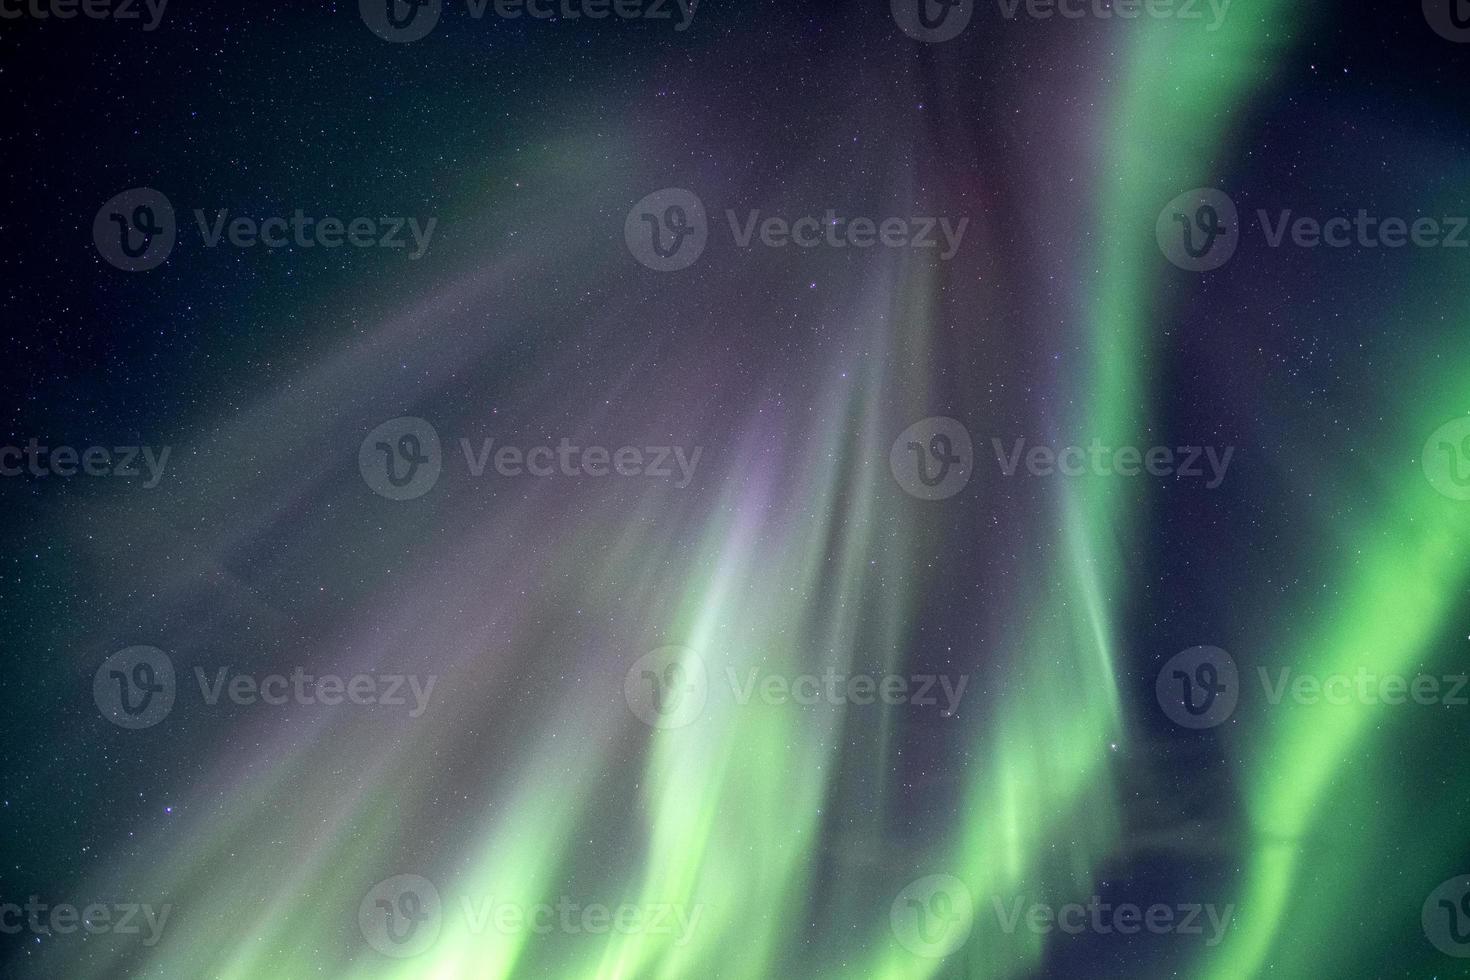 aurora boreal, explosão de aurora boreal no céu noturno foto